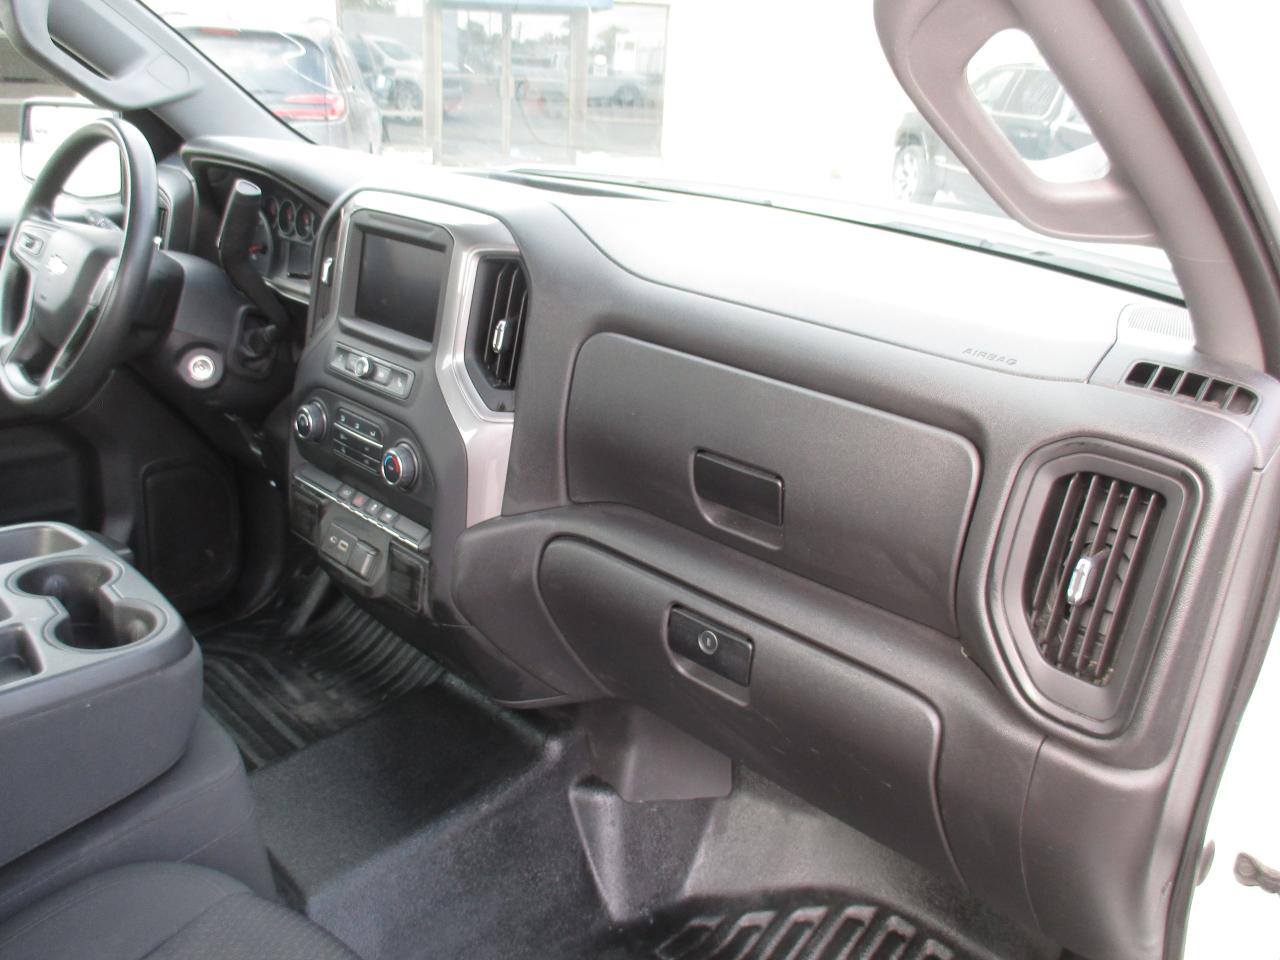 2021 Chevrolet Silverado 1500 2WD Reg Cab 140" Work Truck - Photo #7